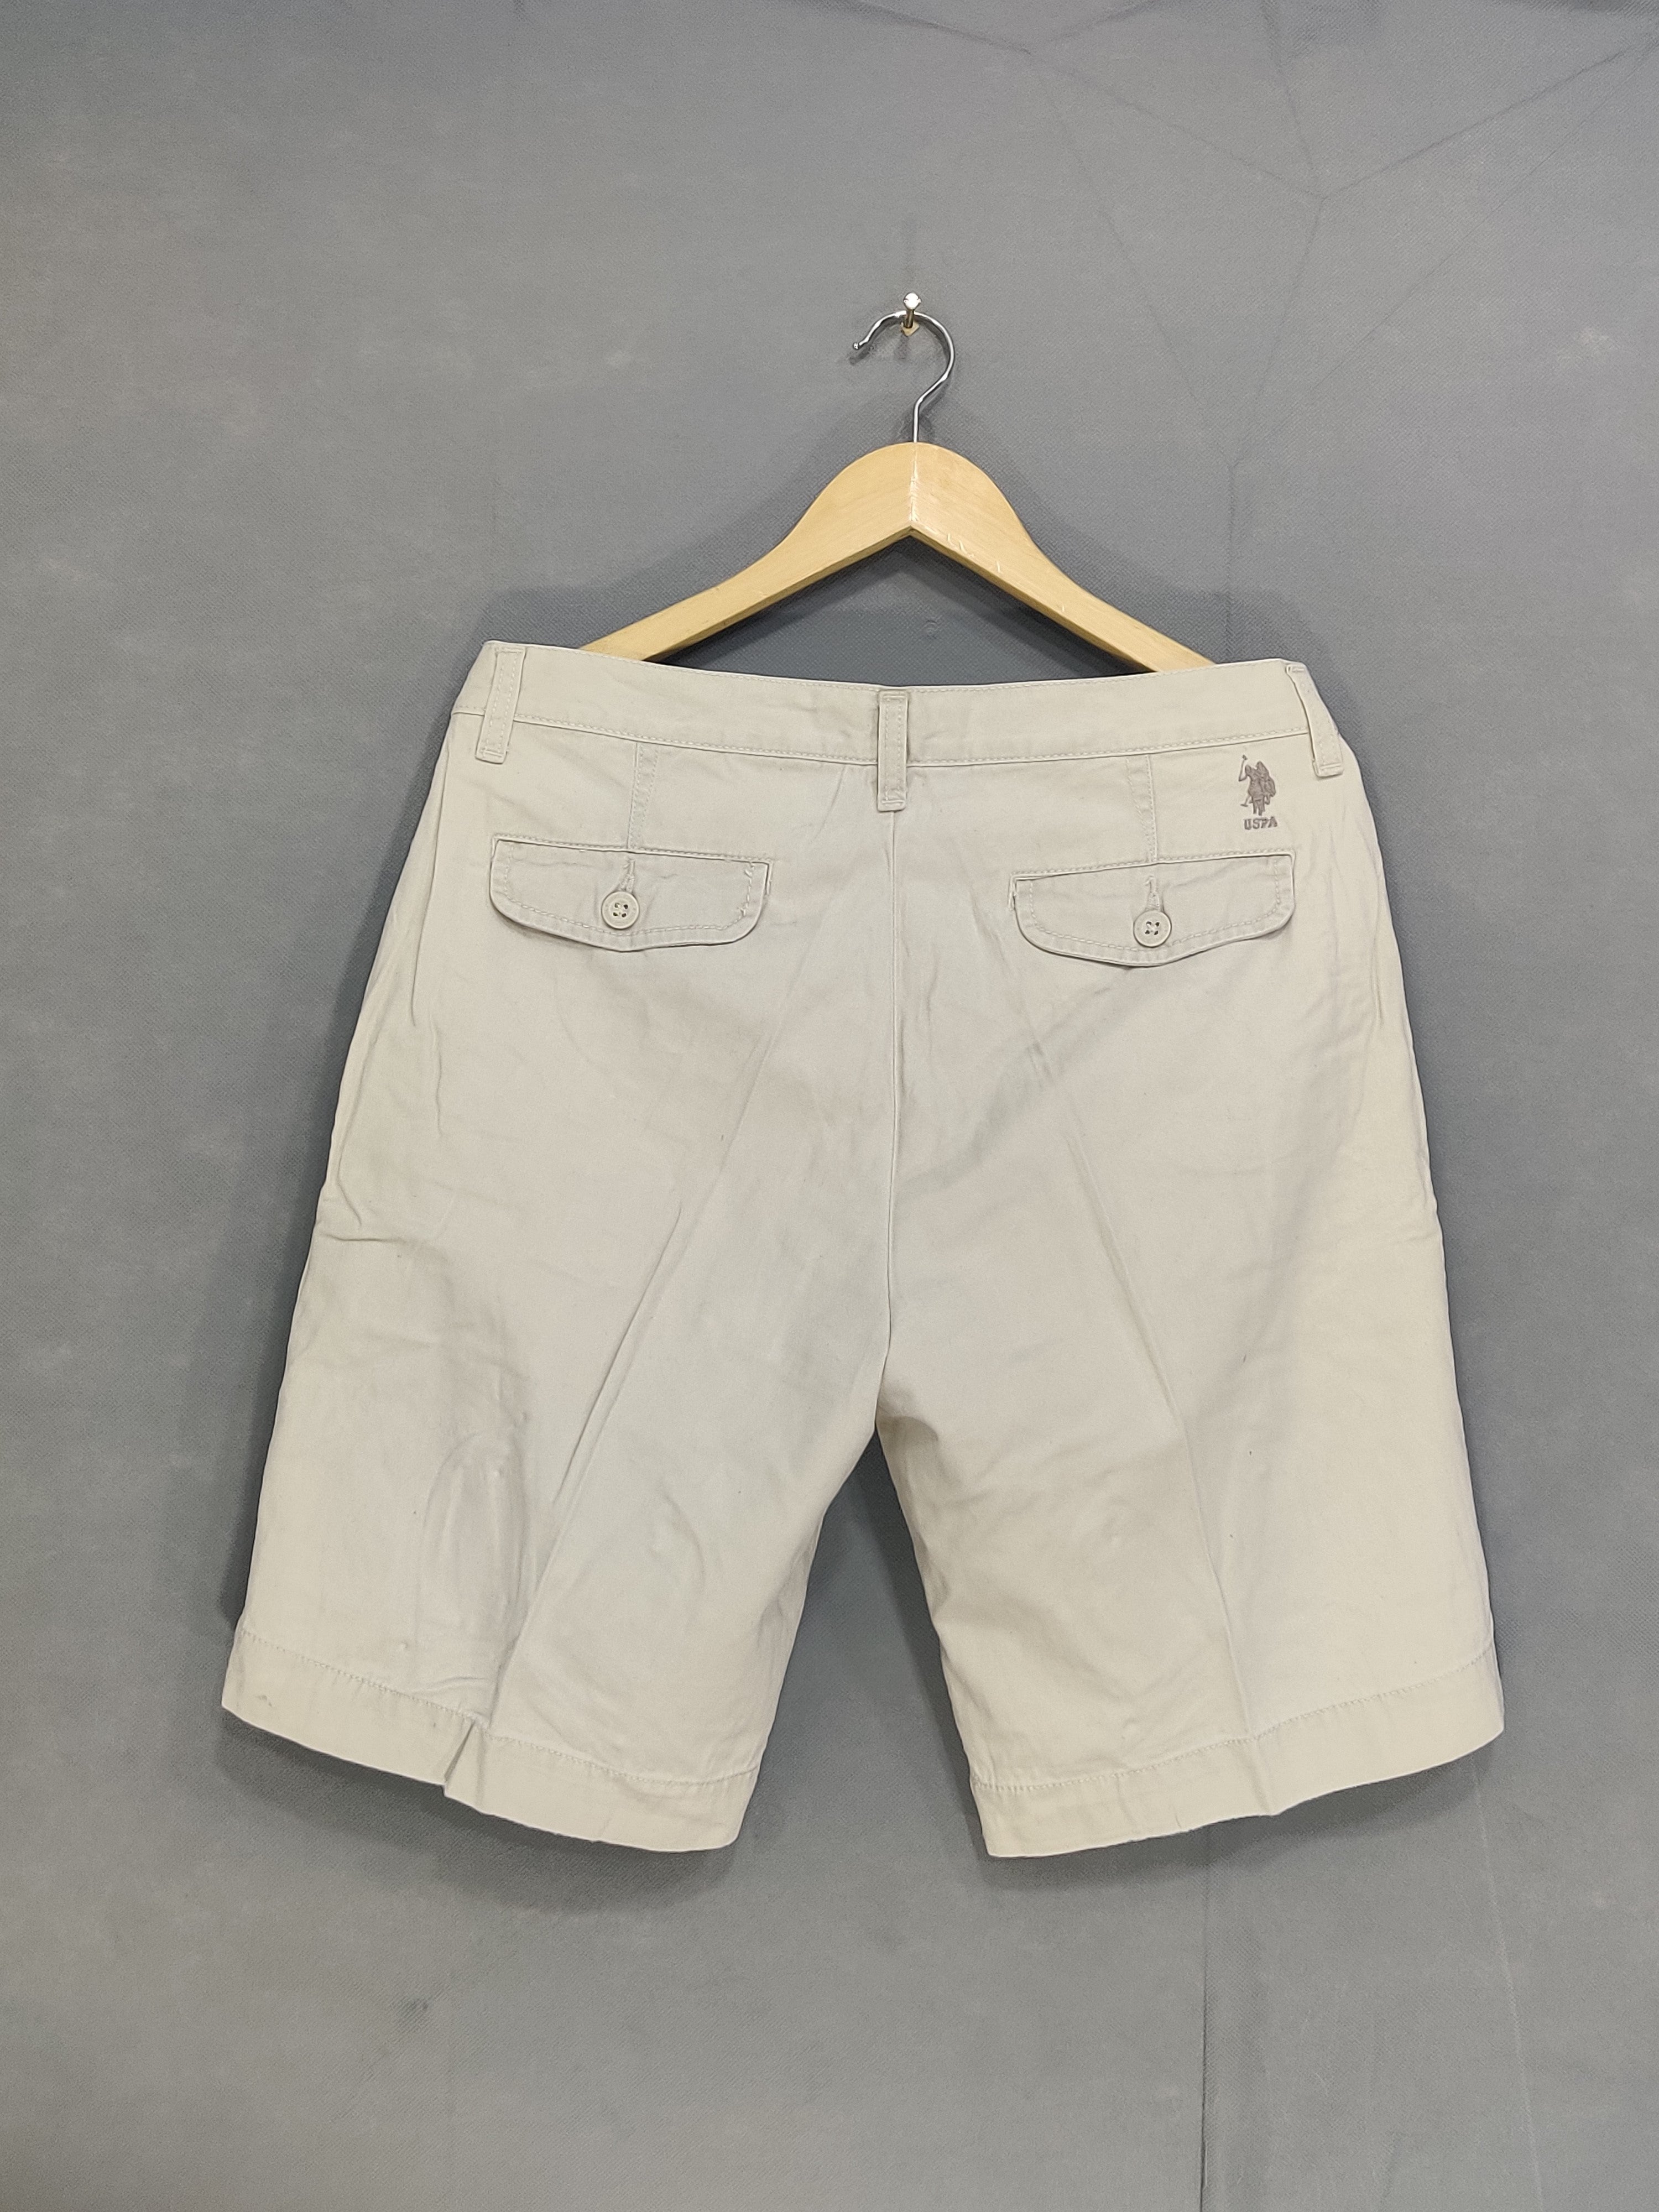 U.S Polo Assn Branded Original Cotton Short For Men